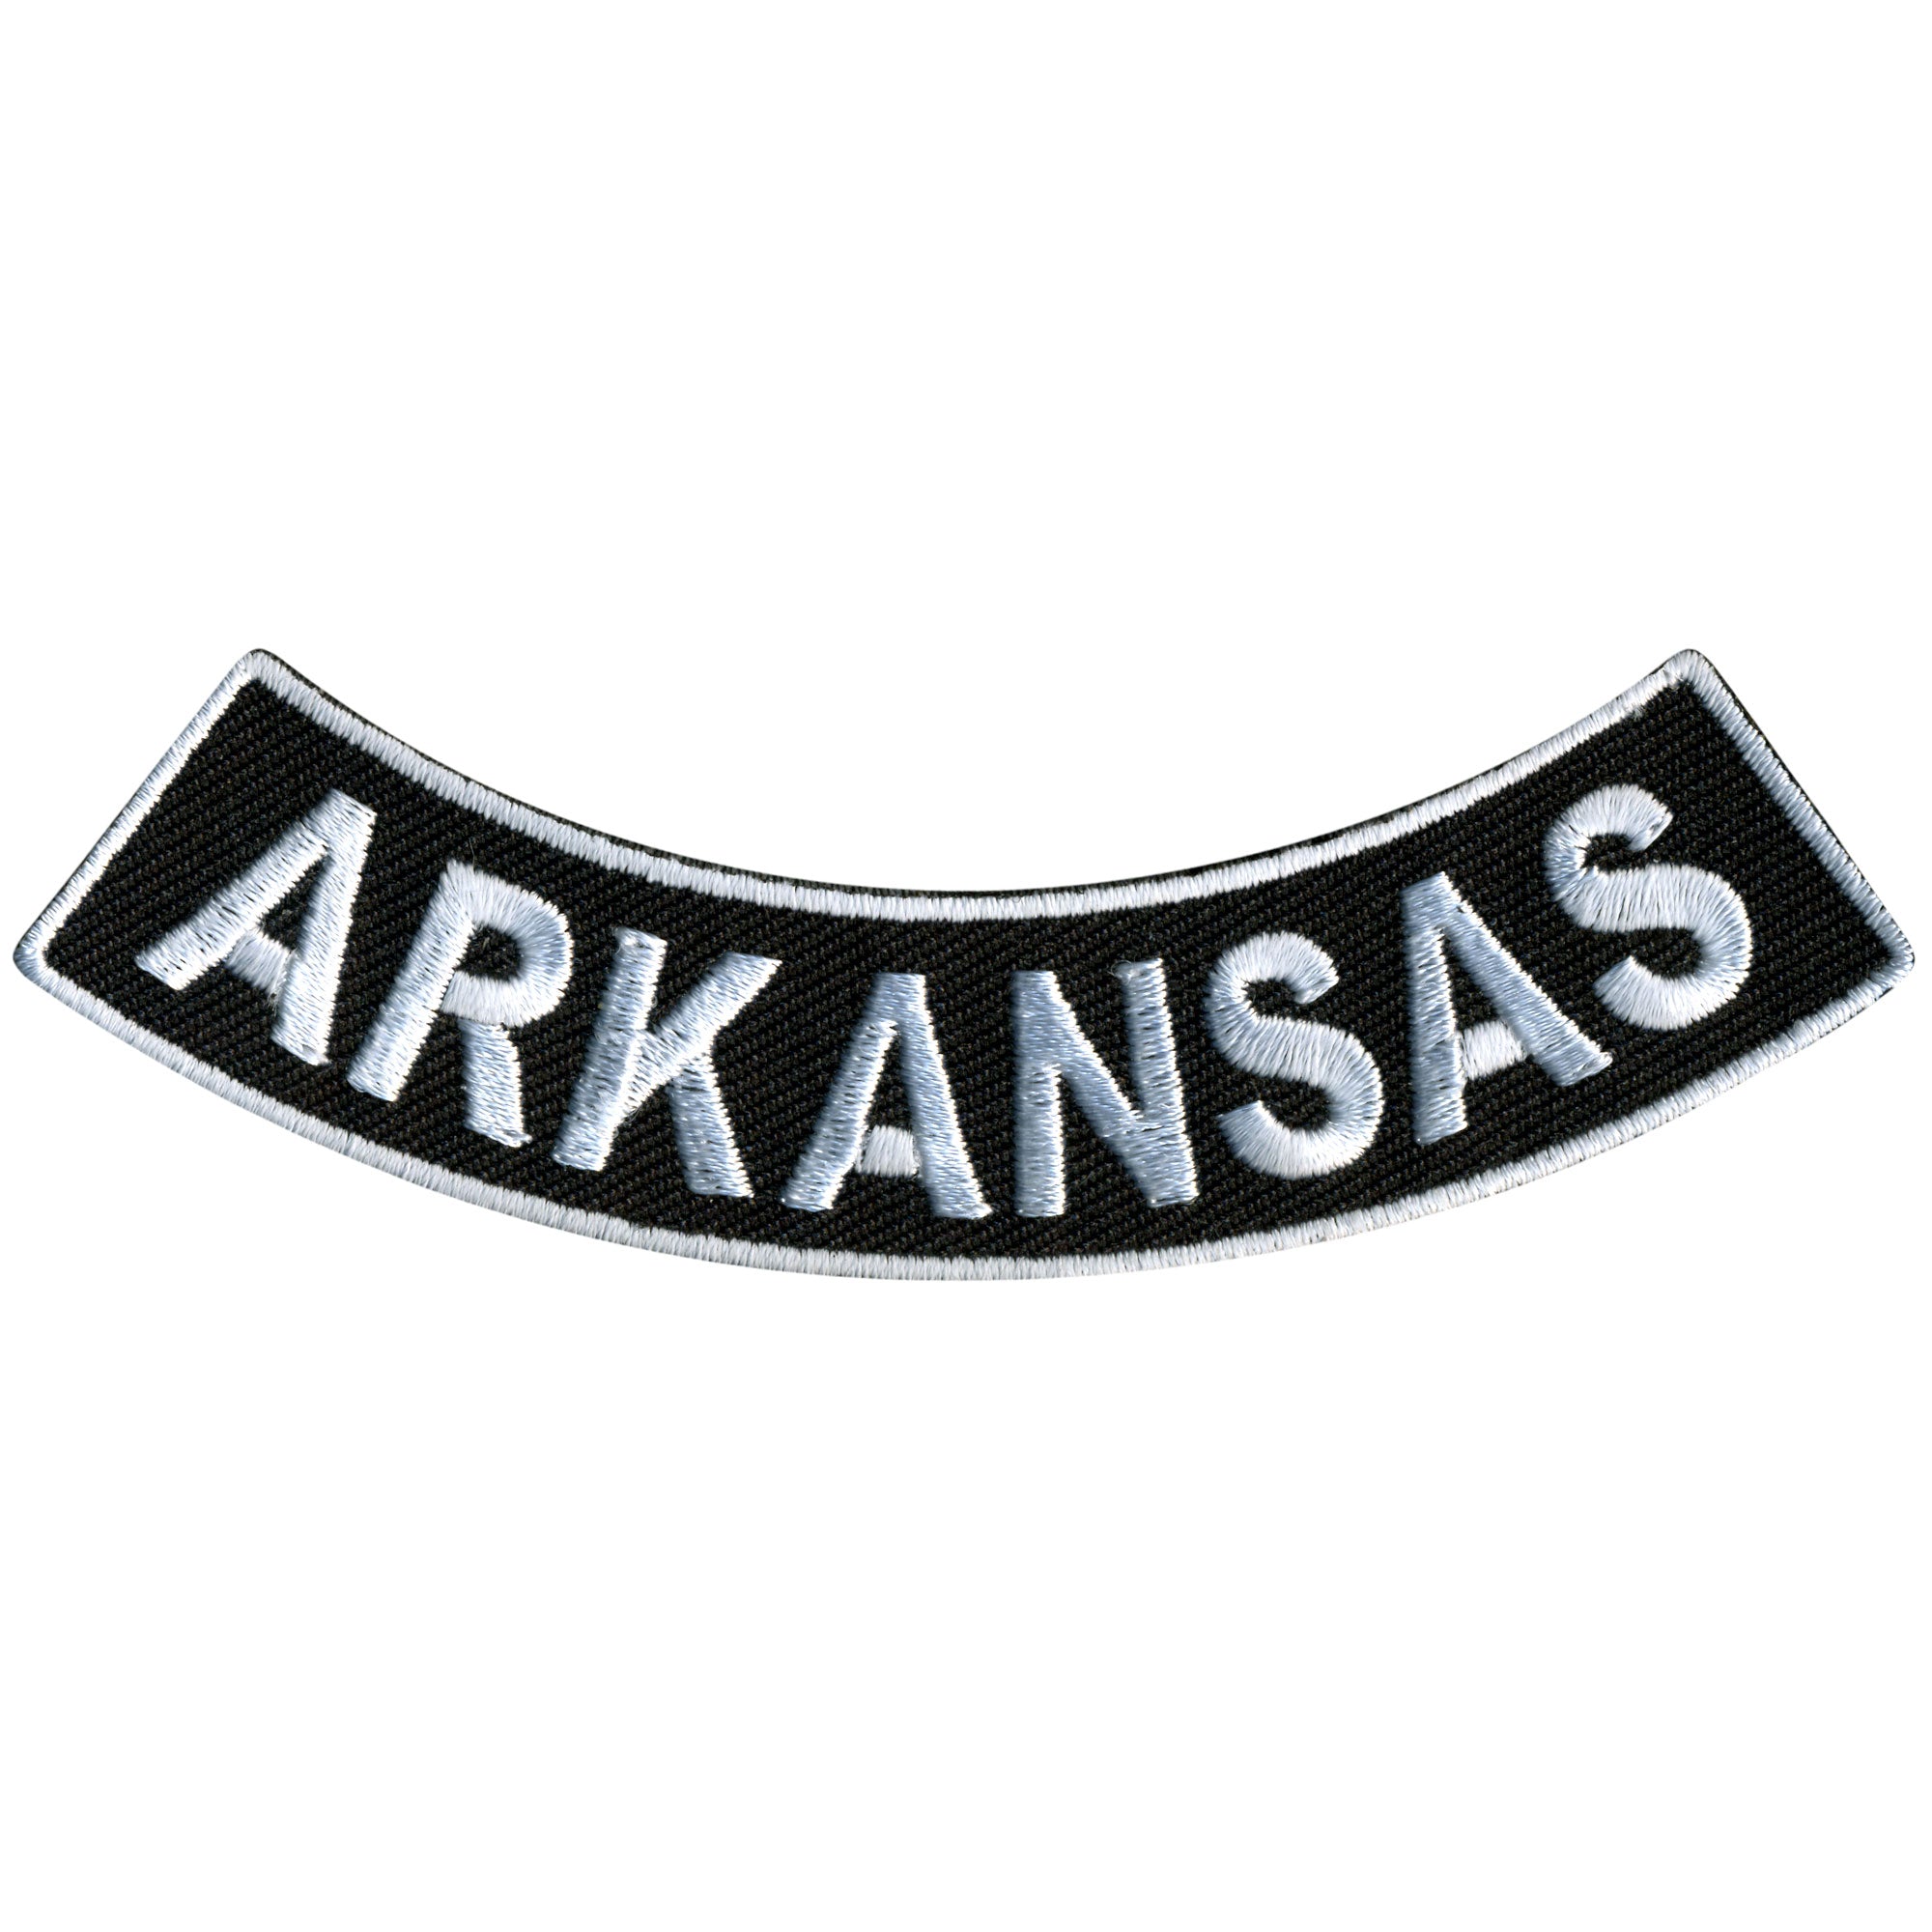 Hot Leathers Arkansas 4” X 1” Bottom Rocker Patch